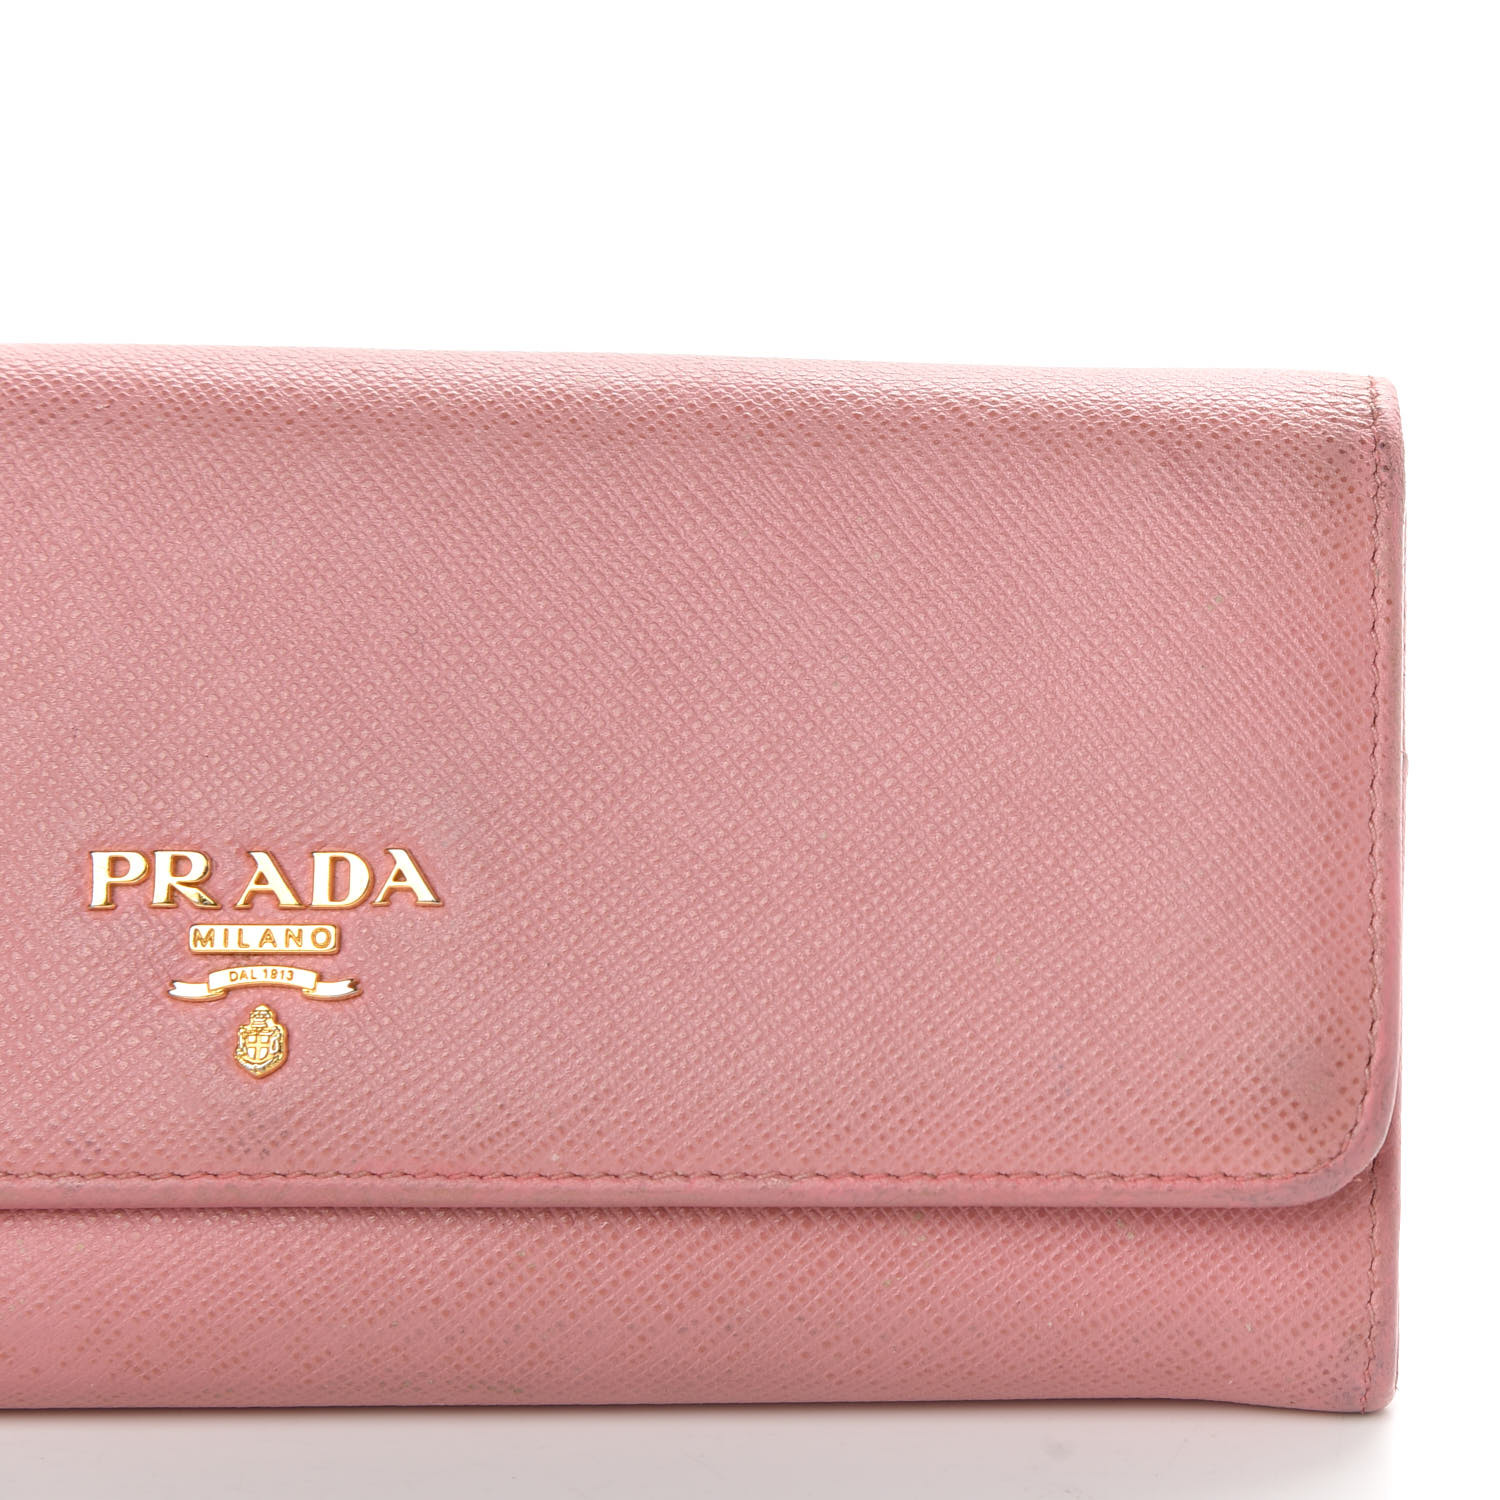 prada small saffiano leather wallet ราคา